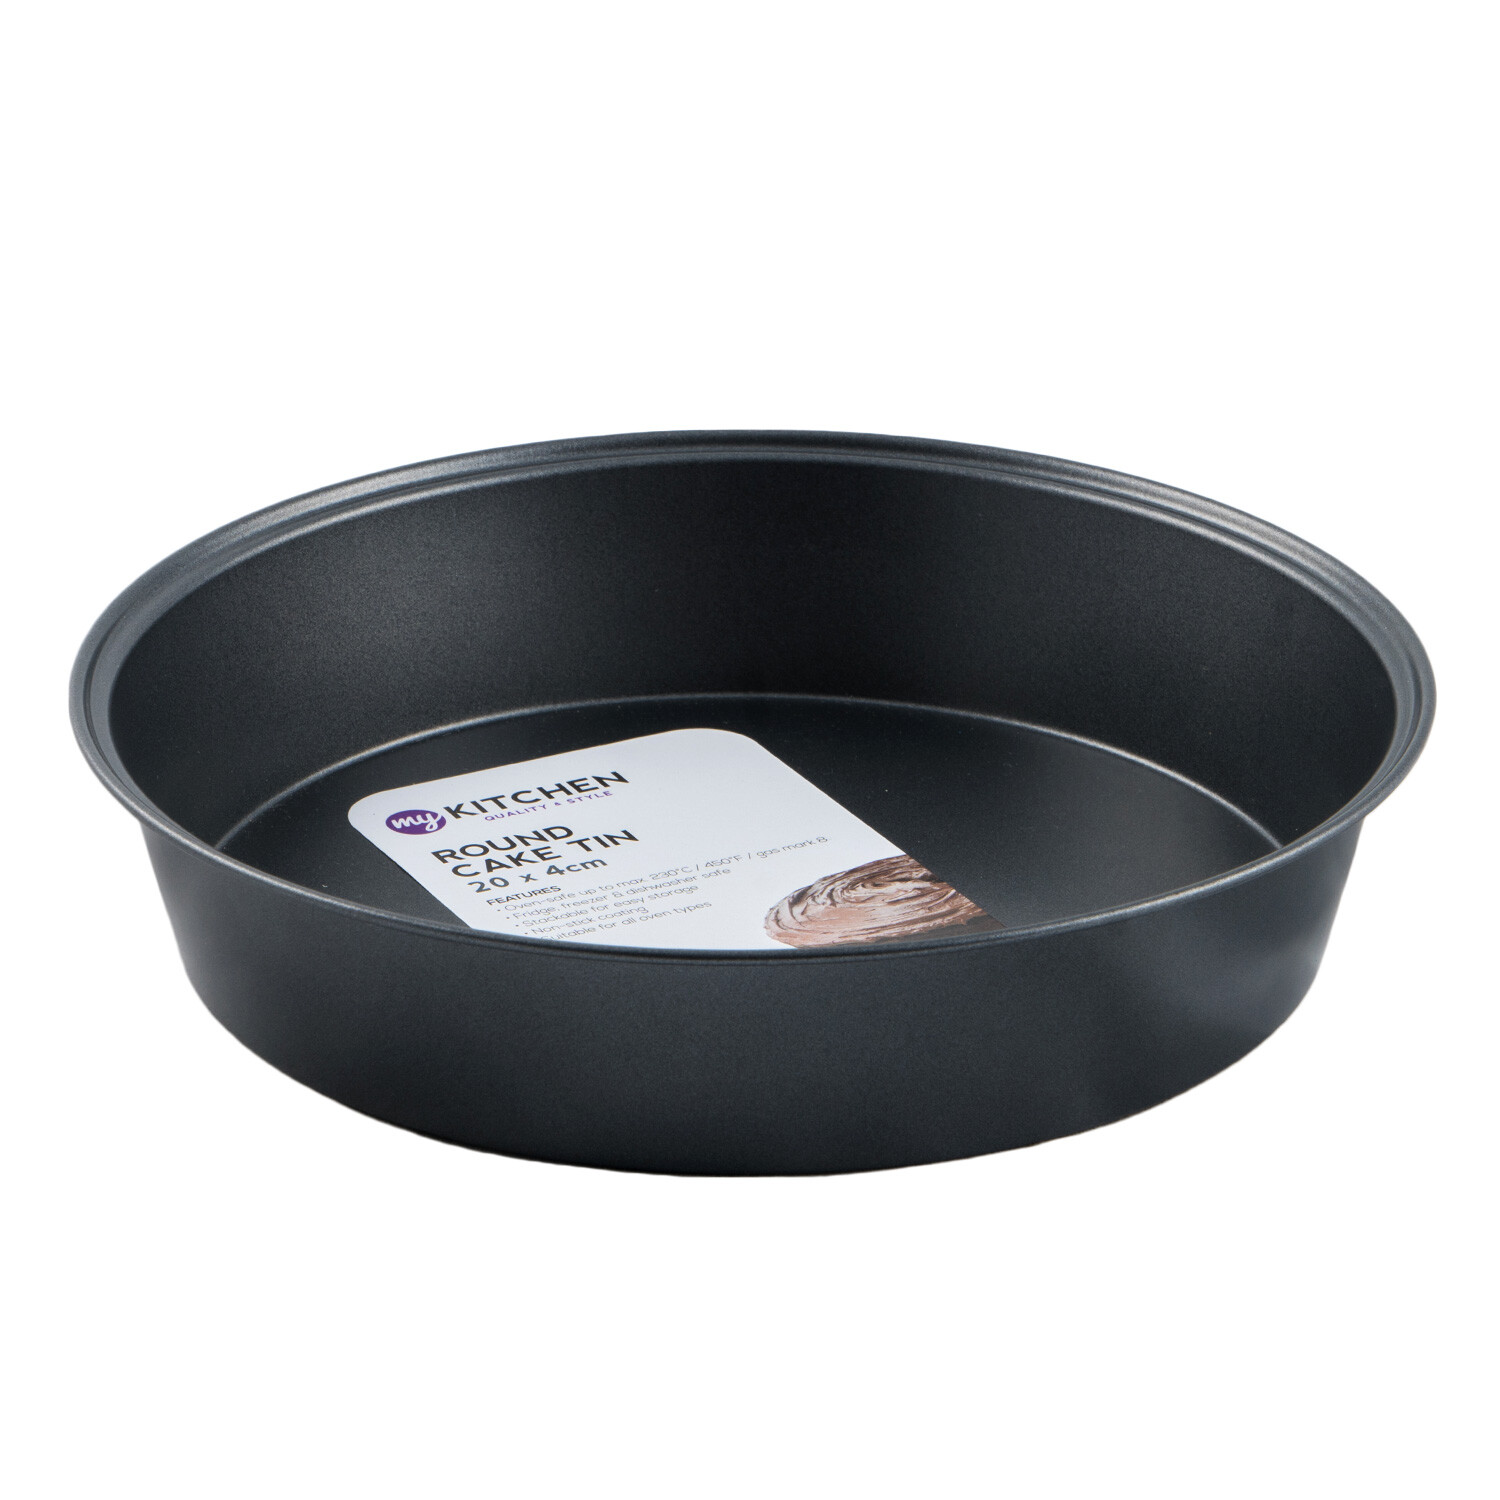 20cm Round Cake Tin - Black Image 2